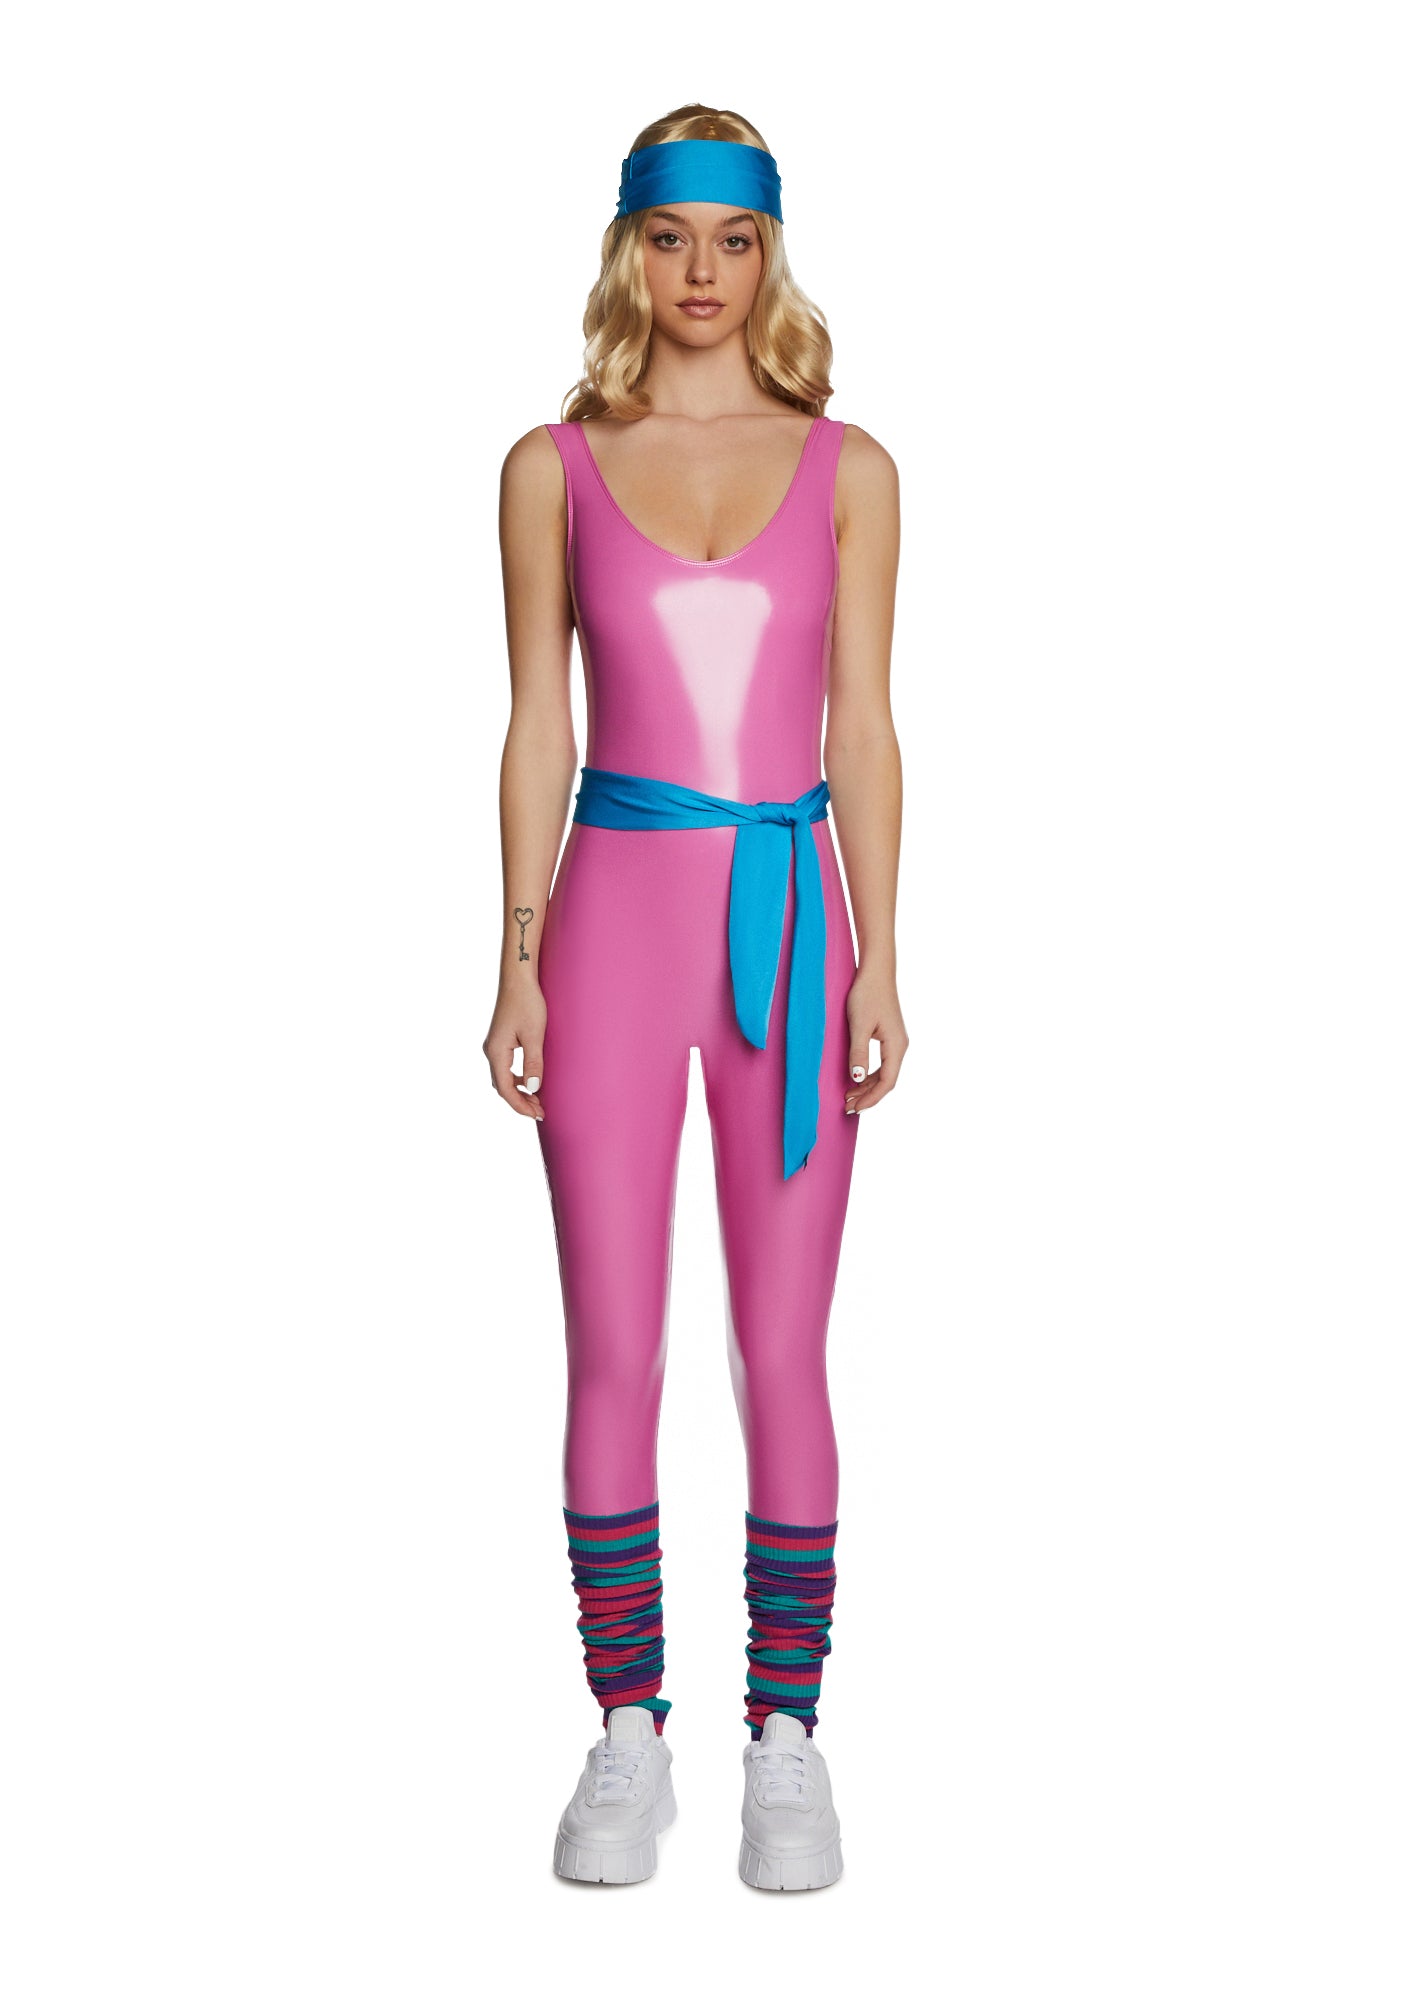 Trickz N' Treatz Sexy 80s Jazzercise Jumpsuit Set - Pink